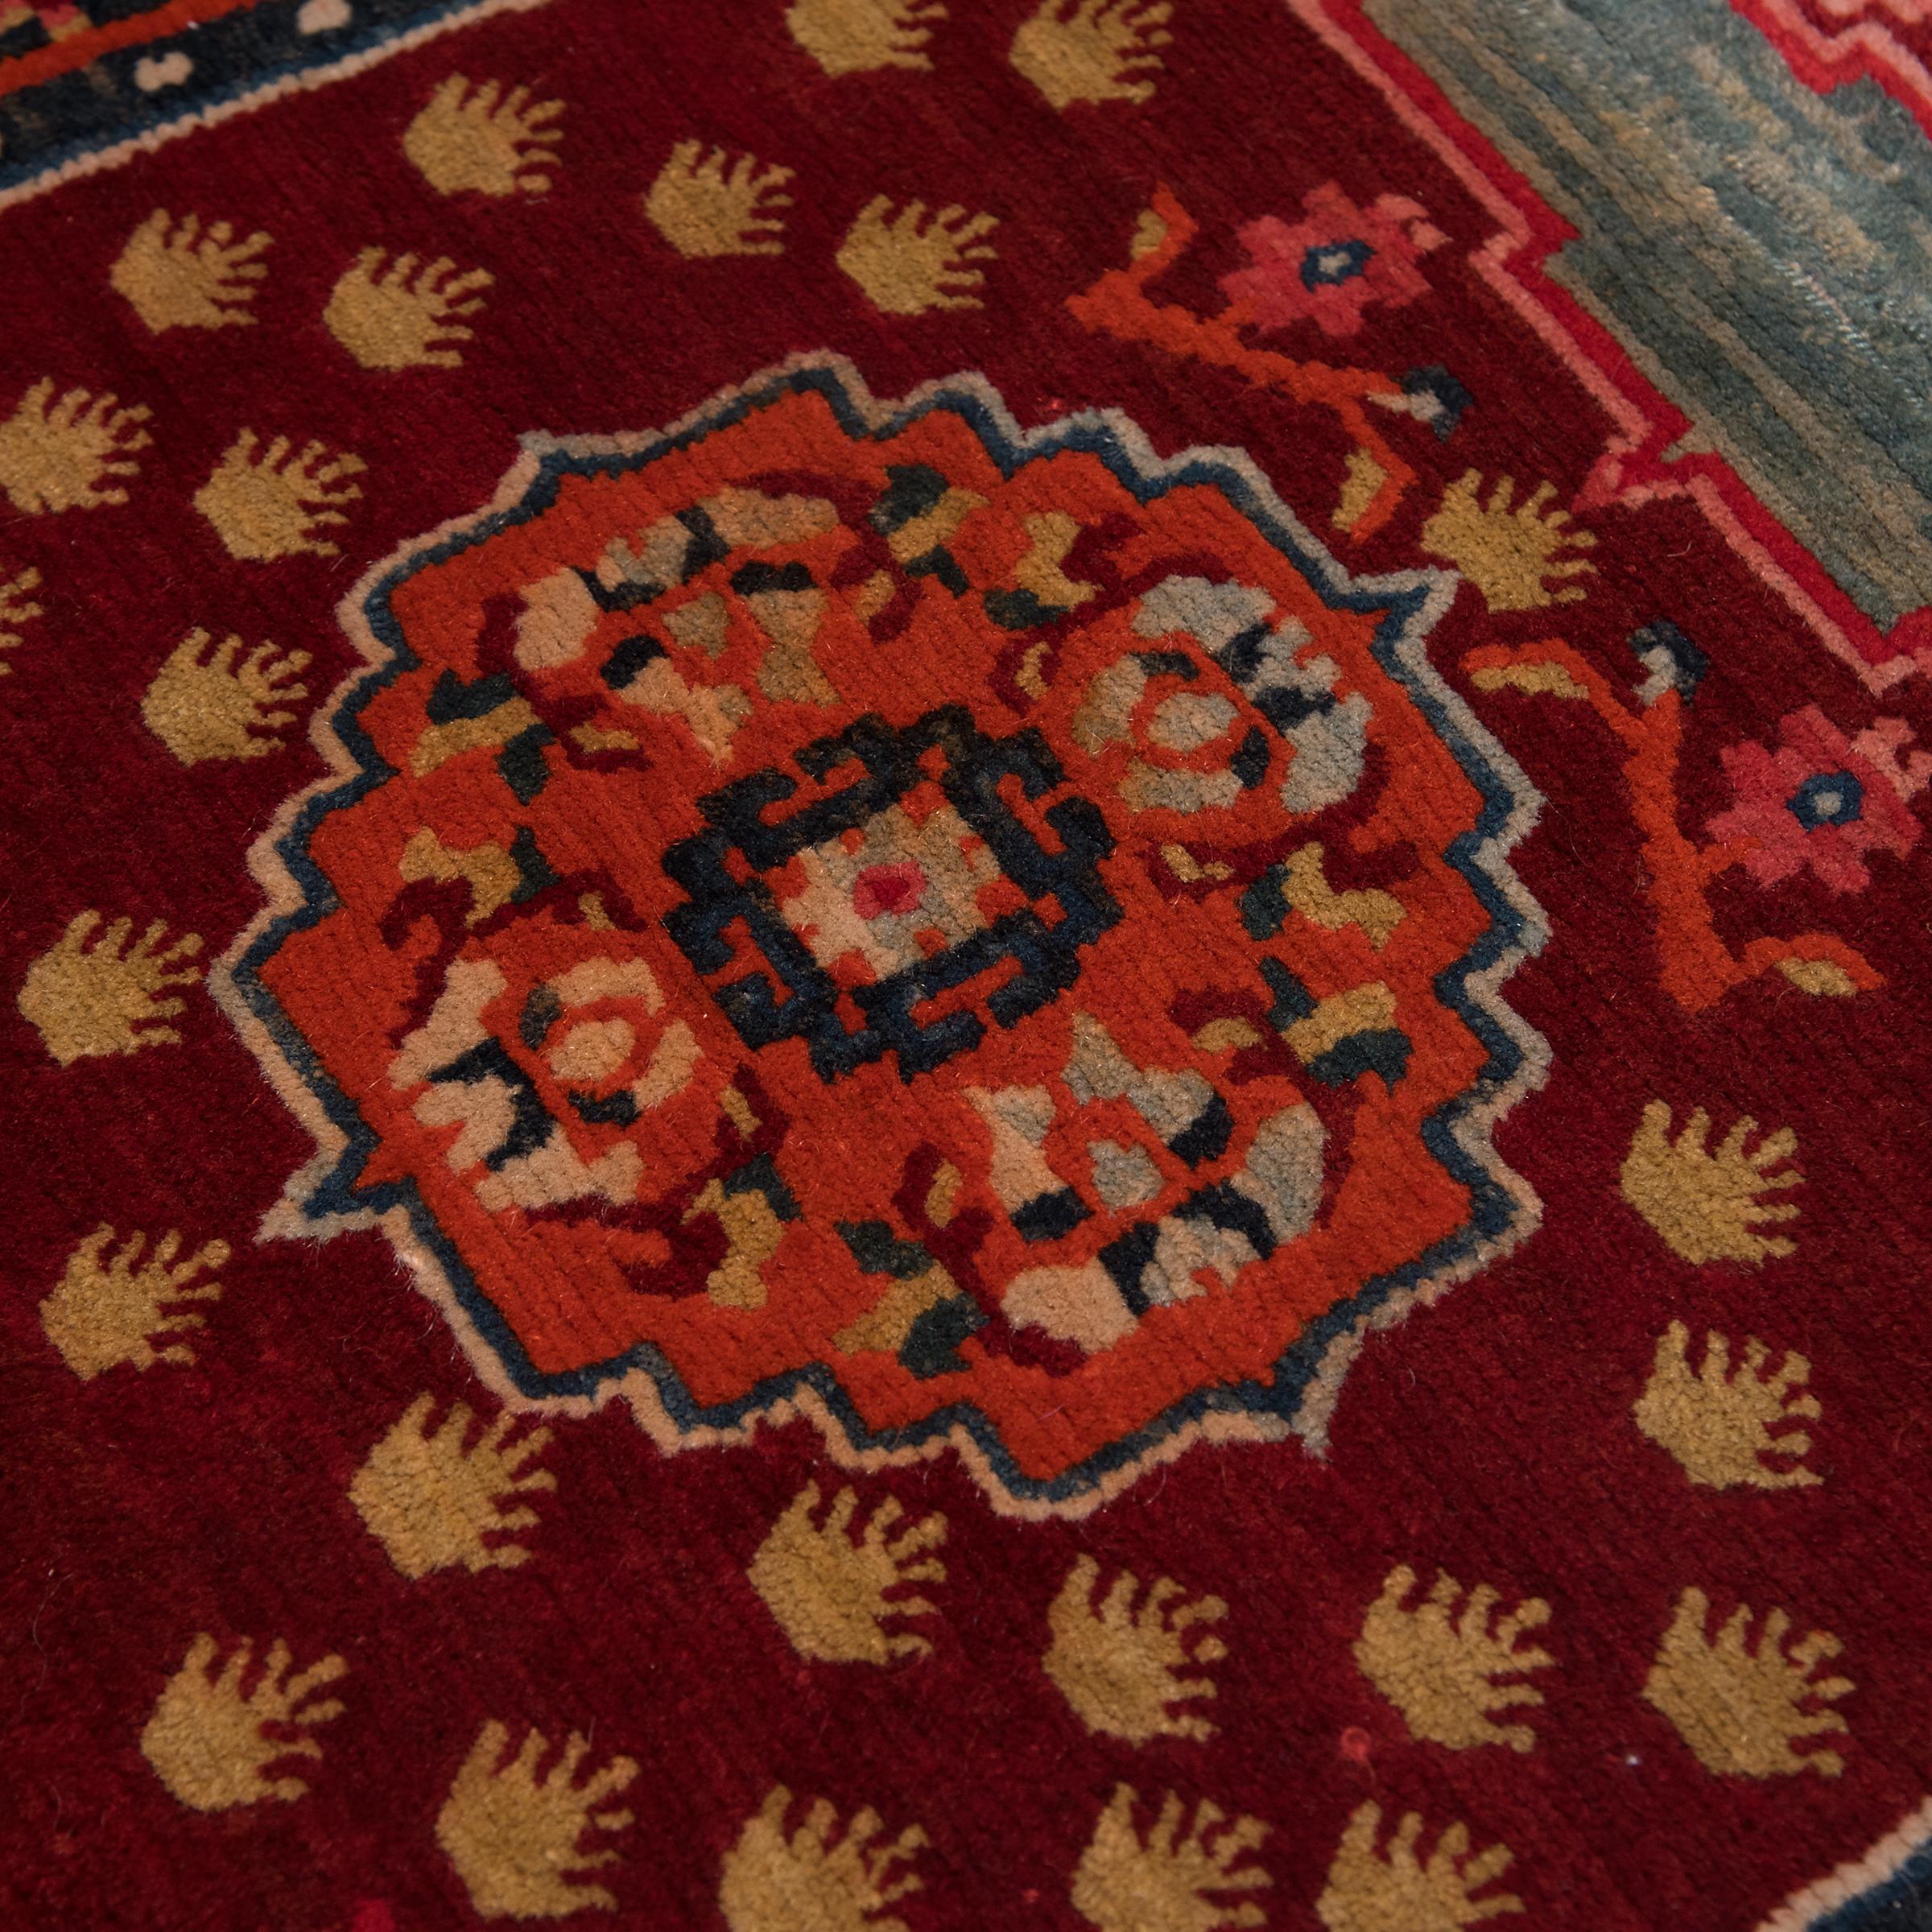 Vegetable Dyed Tibetan Saddle Carpet with Meander Border, c. 1900 For Sale